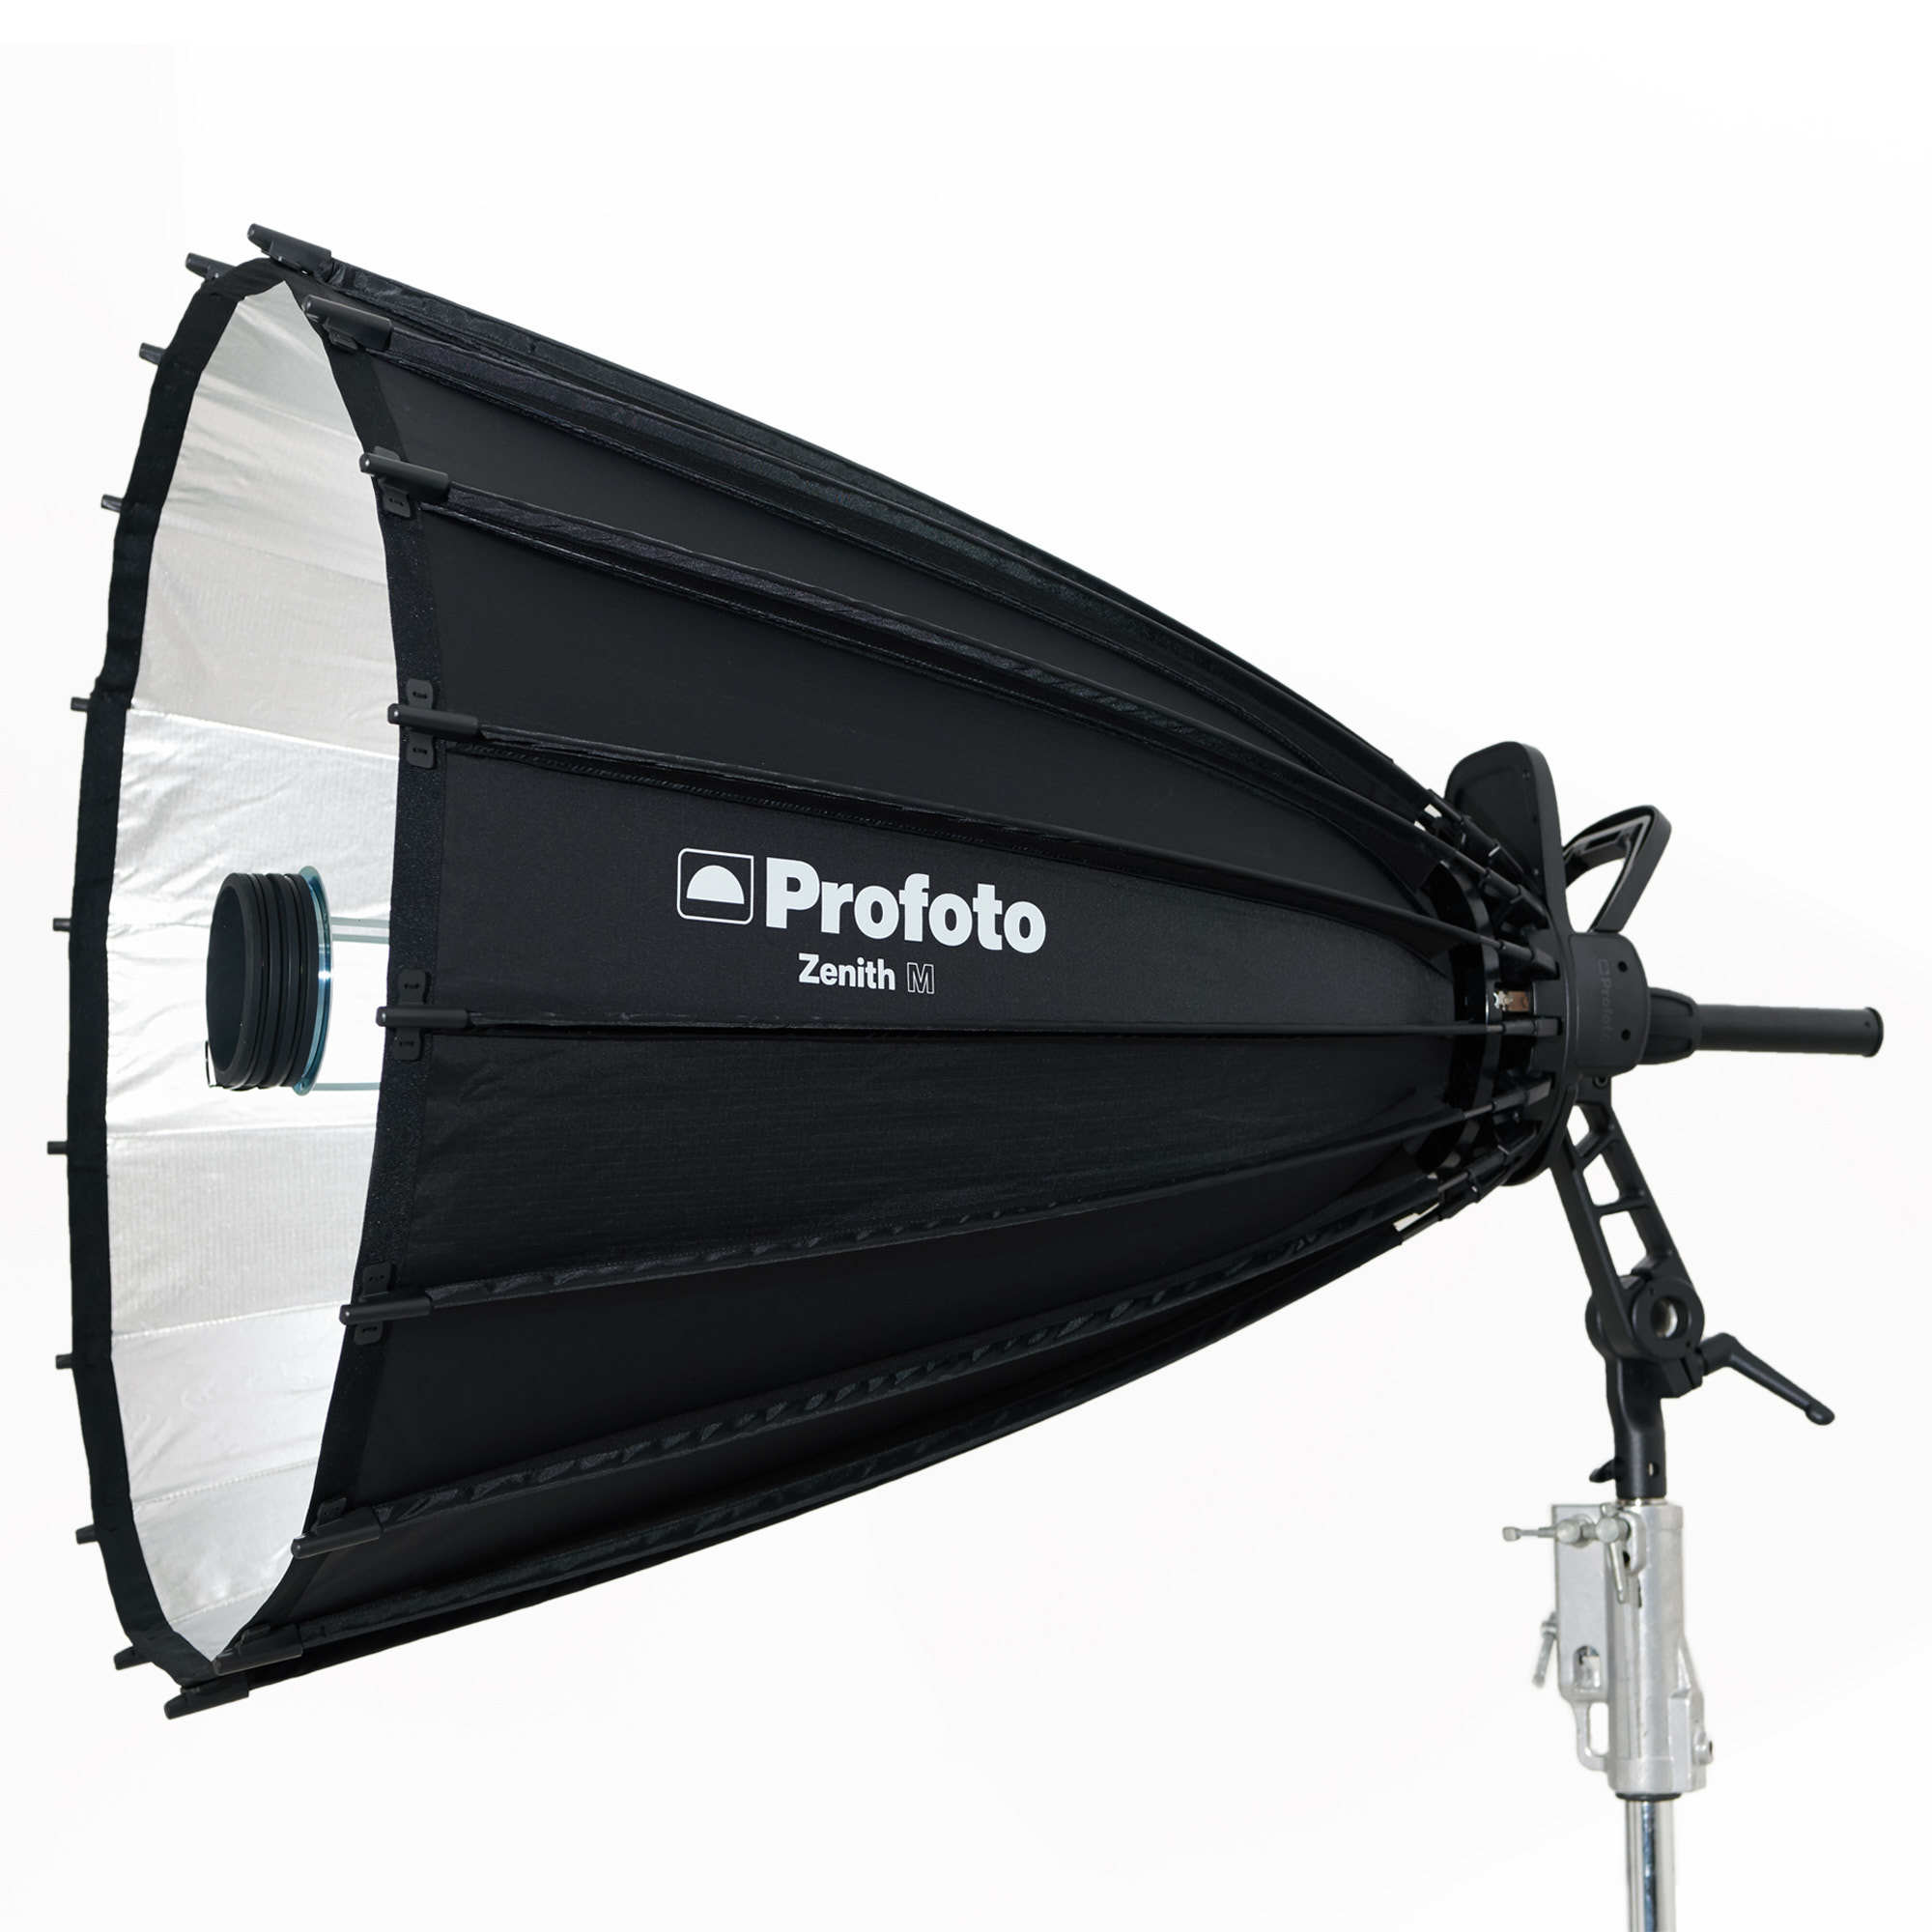 profoto-zenith-m-parabolic-reflector